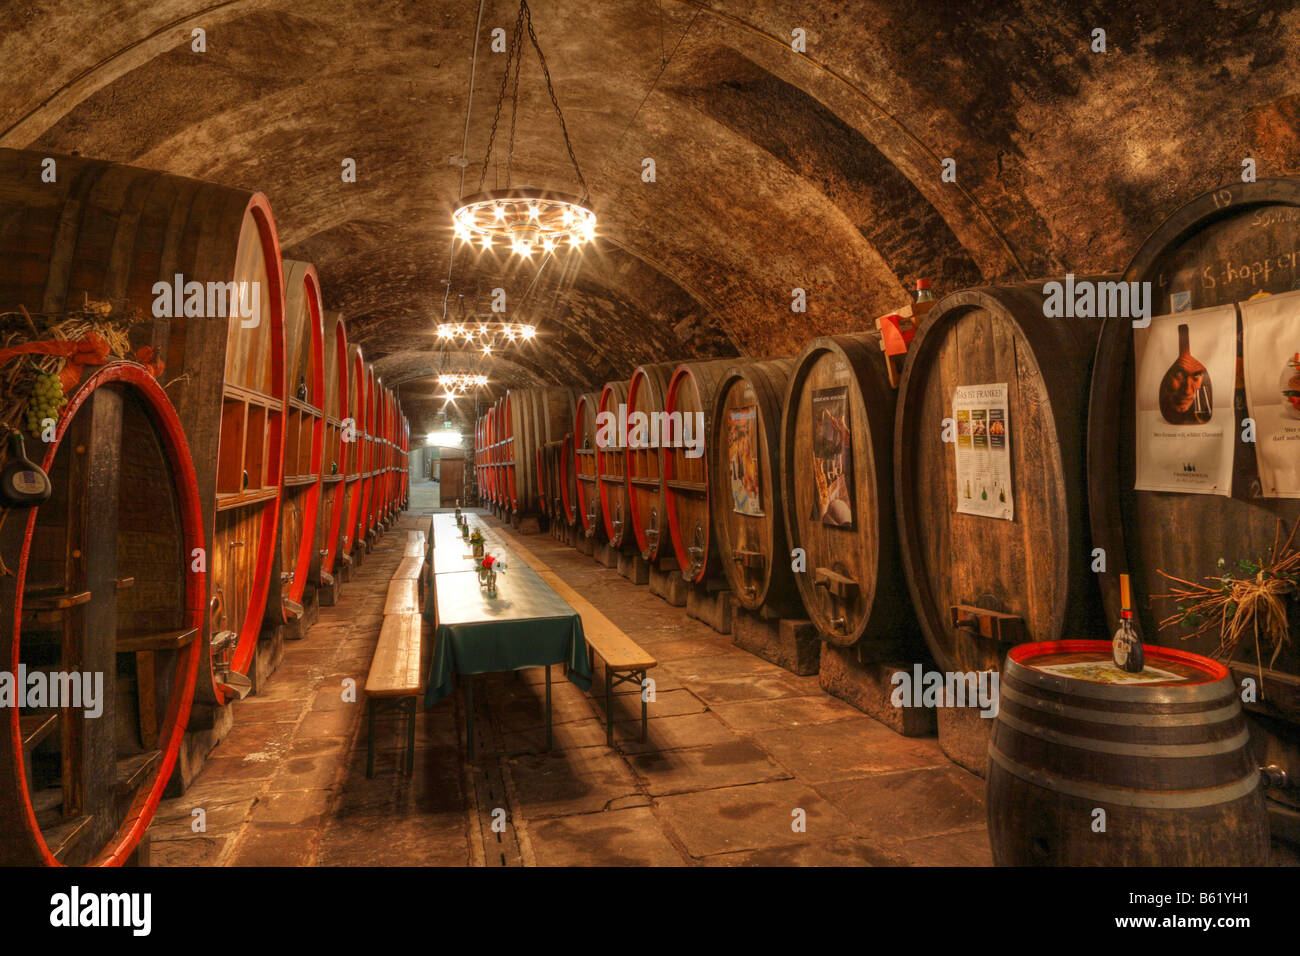 Wine cellar, winemaker's cellar in Red Schloss Palace, Hammelburg, Rhoen Mountains, Lower Franconia, Bavaria, Germany, Europe Stock Photo